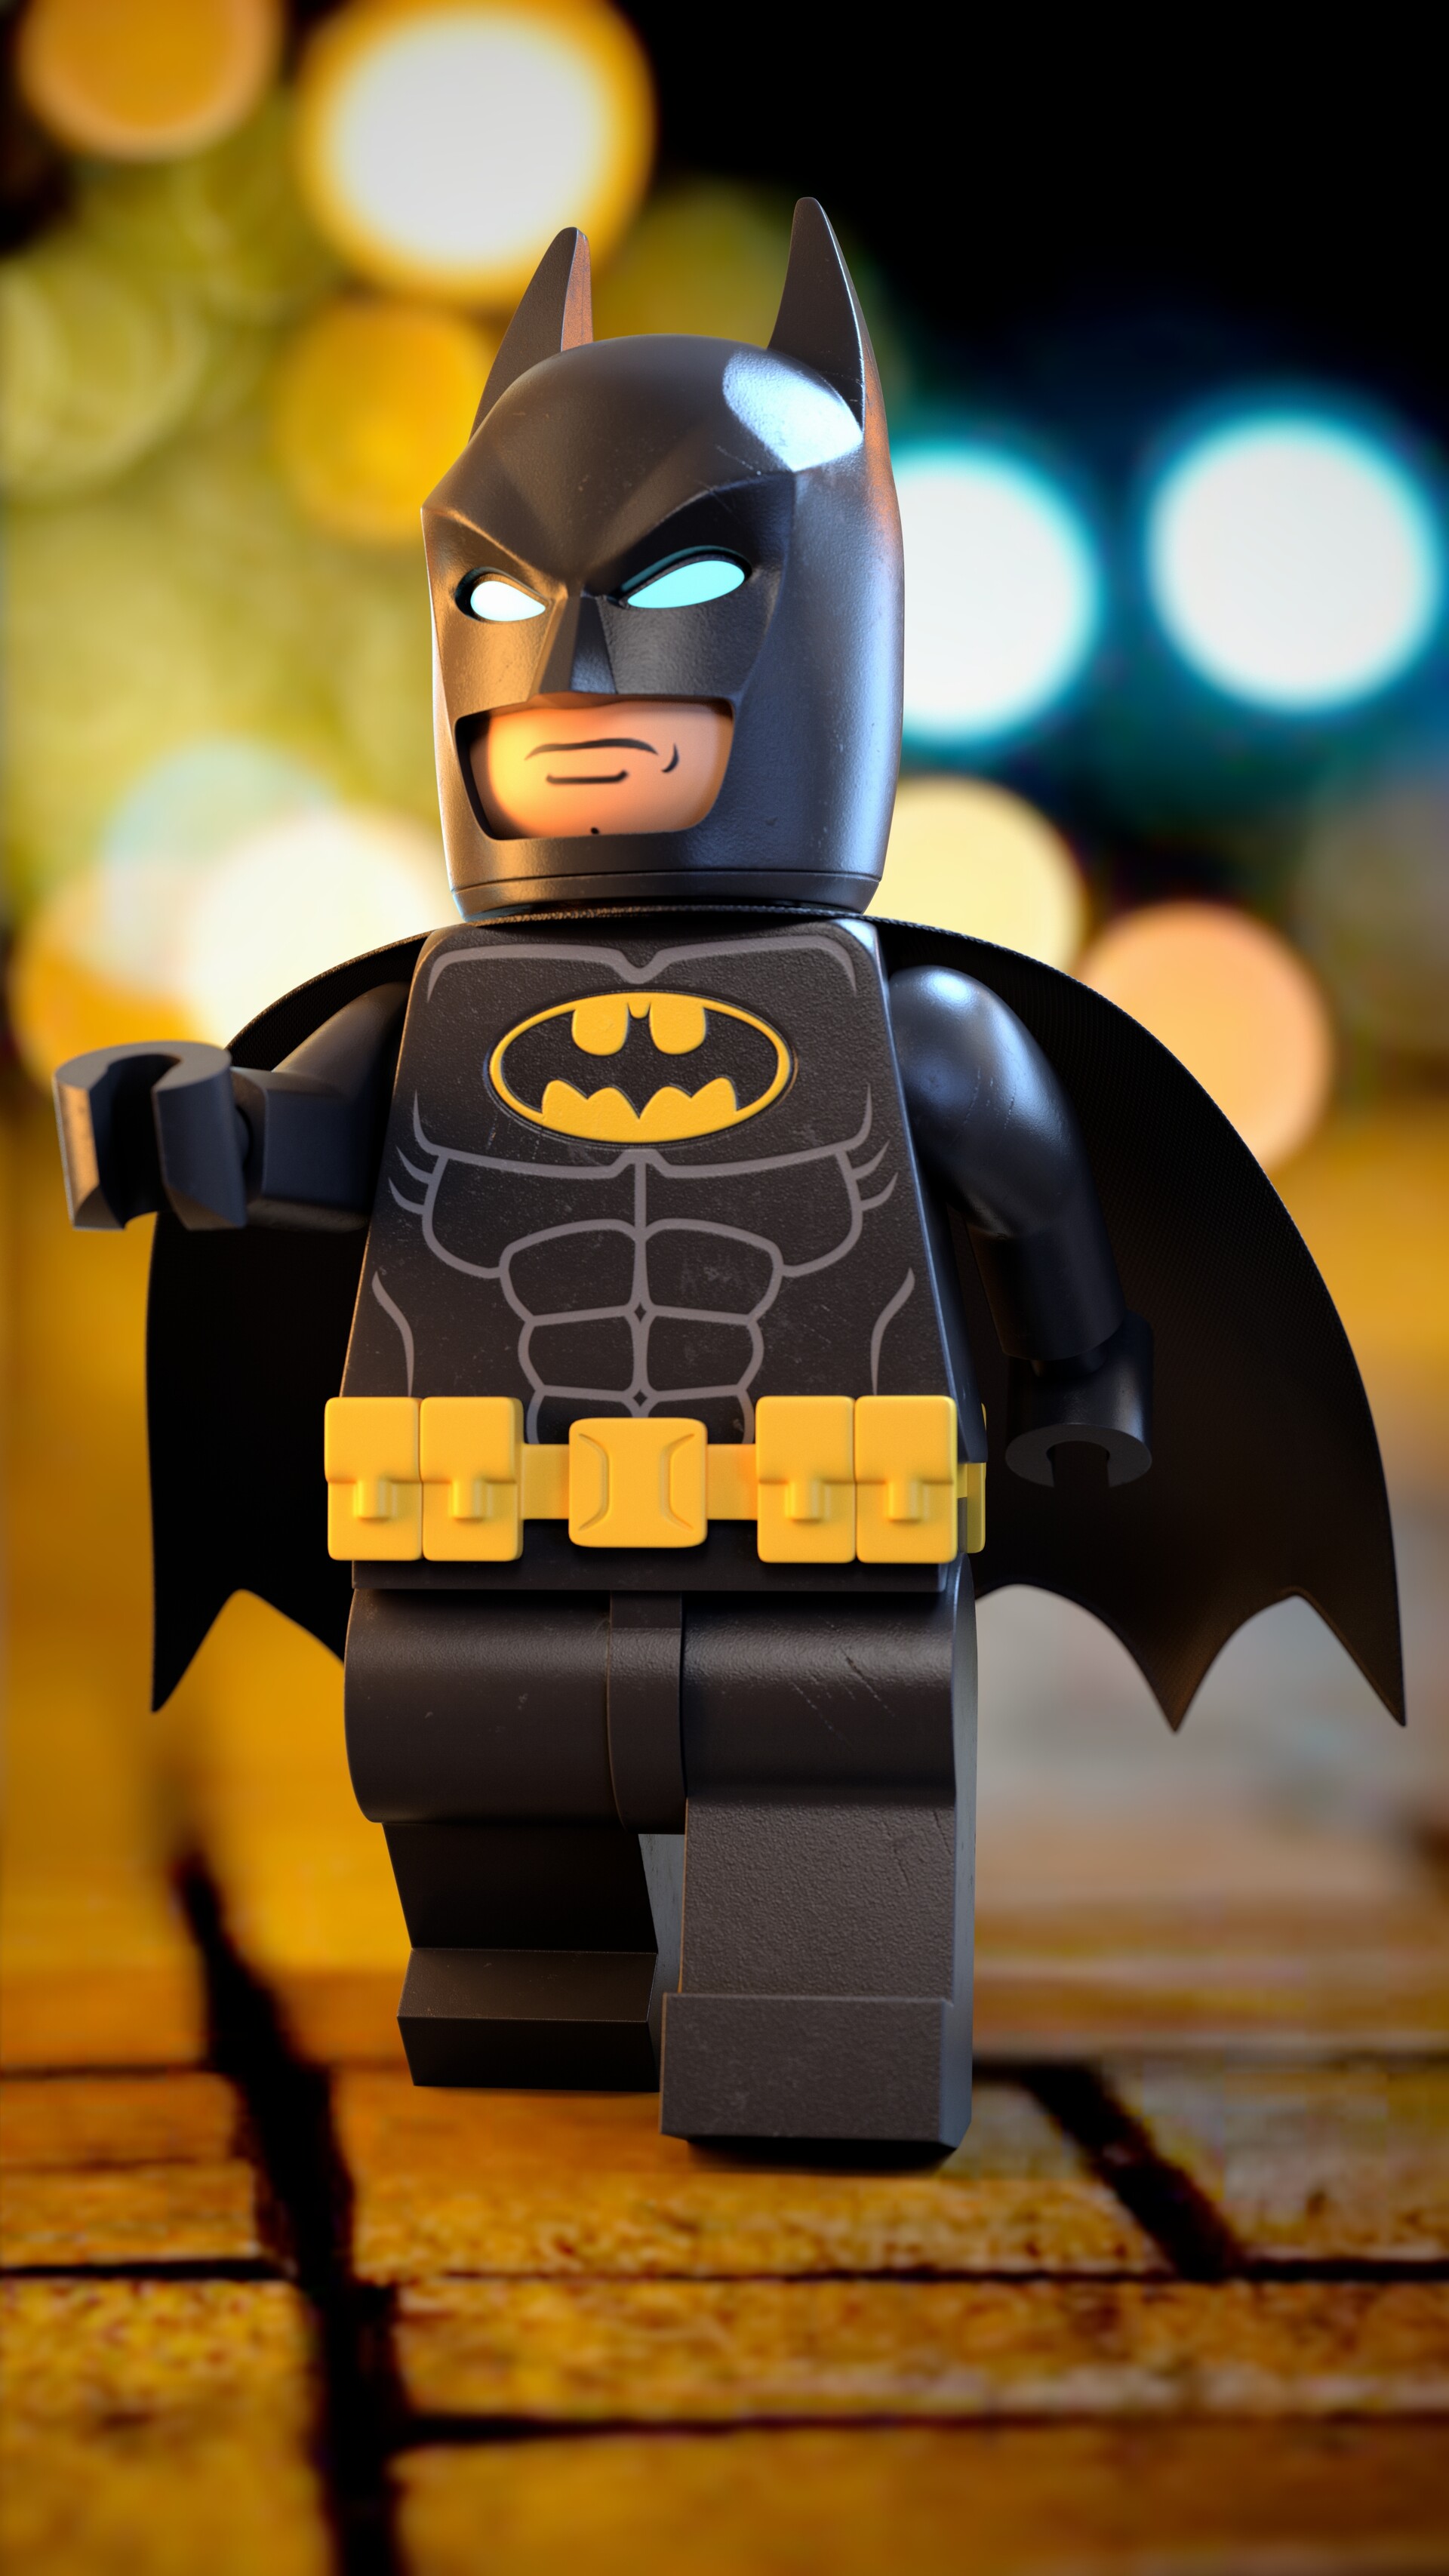 Im Batman LEGO Batman wallpaper  Lego batman movie Lego batman  wallpaper Batman movie